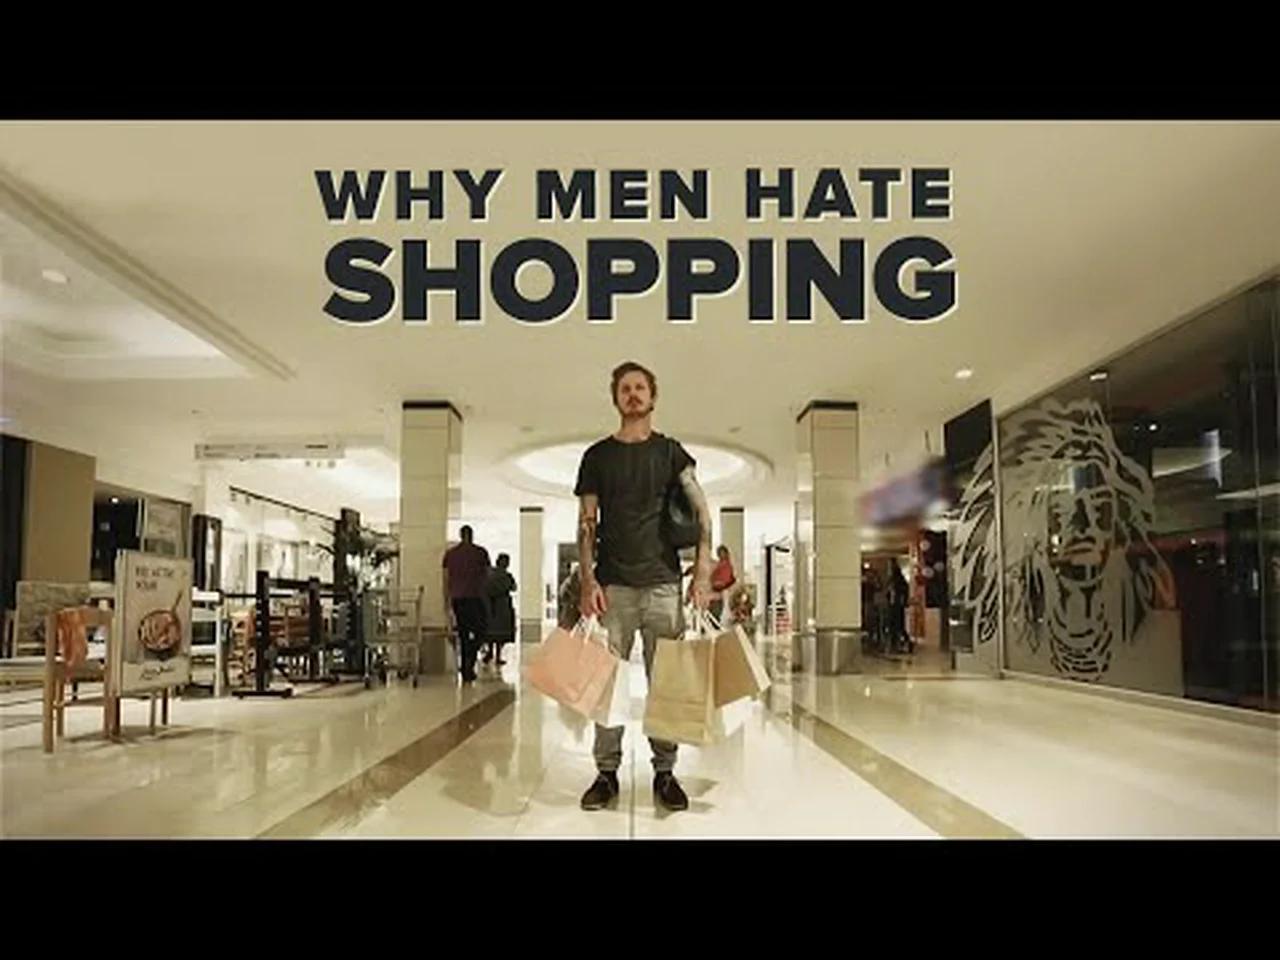 I hate men. Hate shopping. Man hate shopping. Shop shop песня. Заставка shop hate.